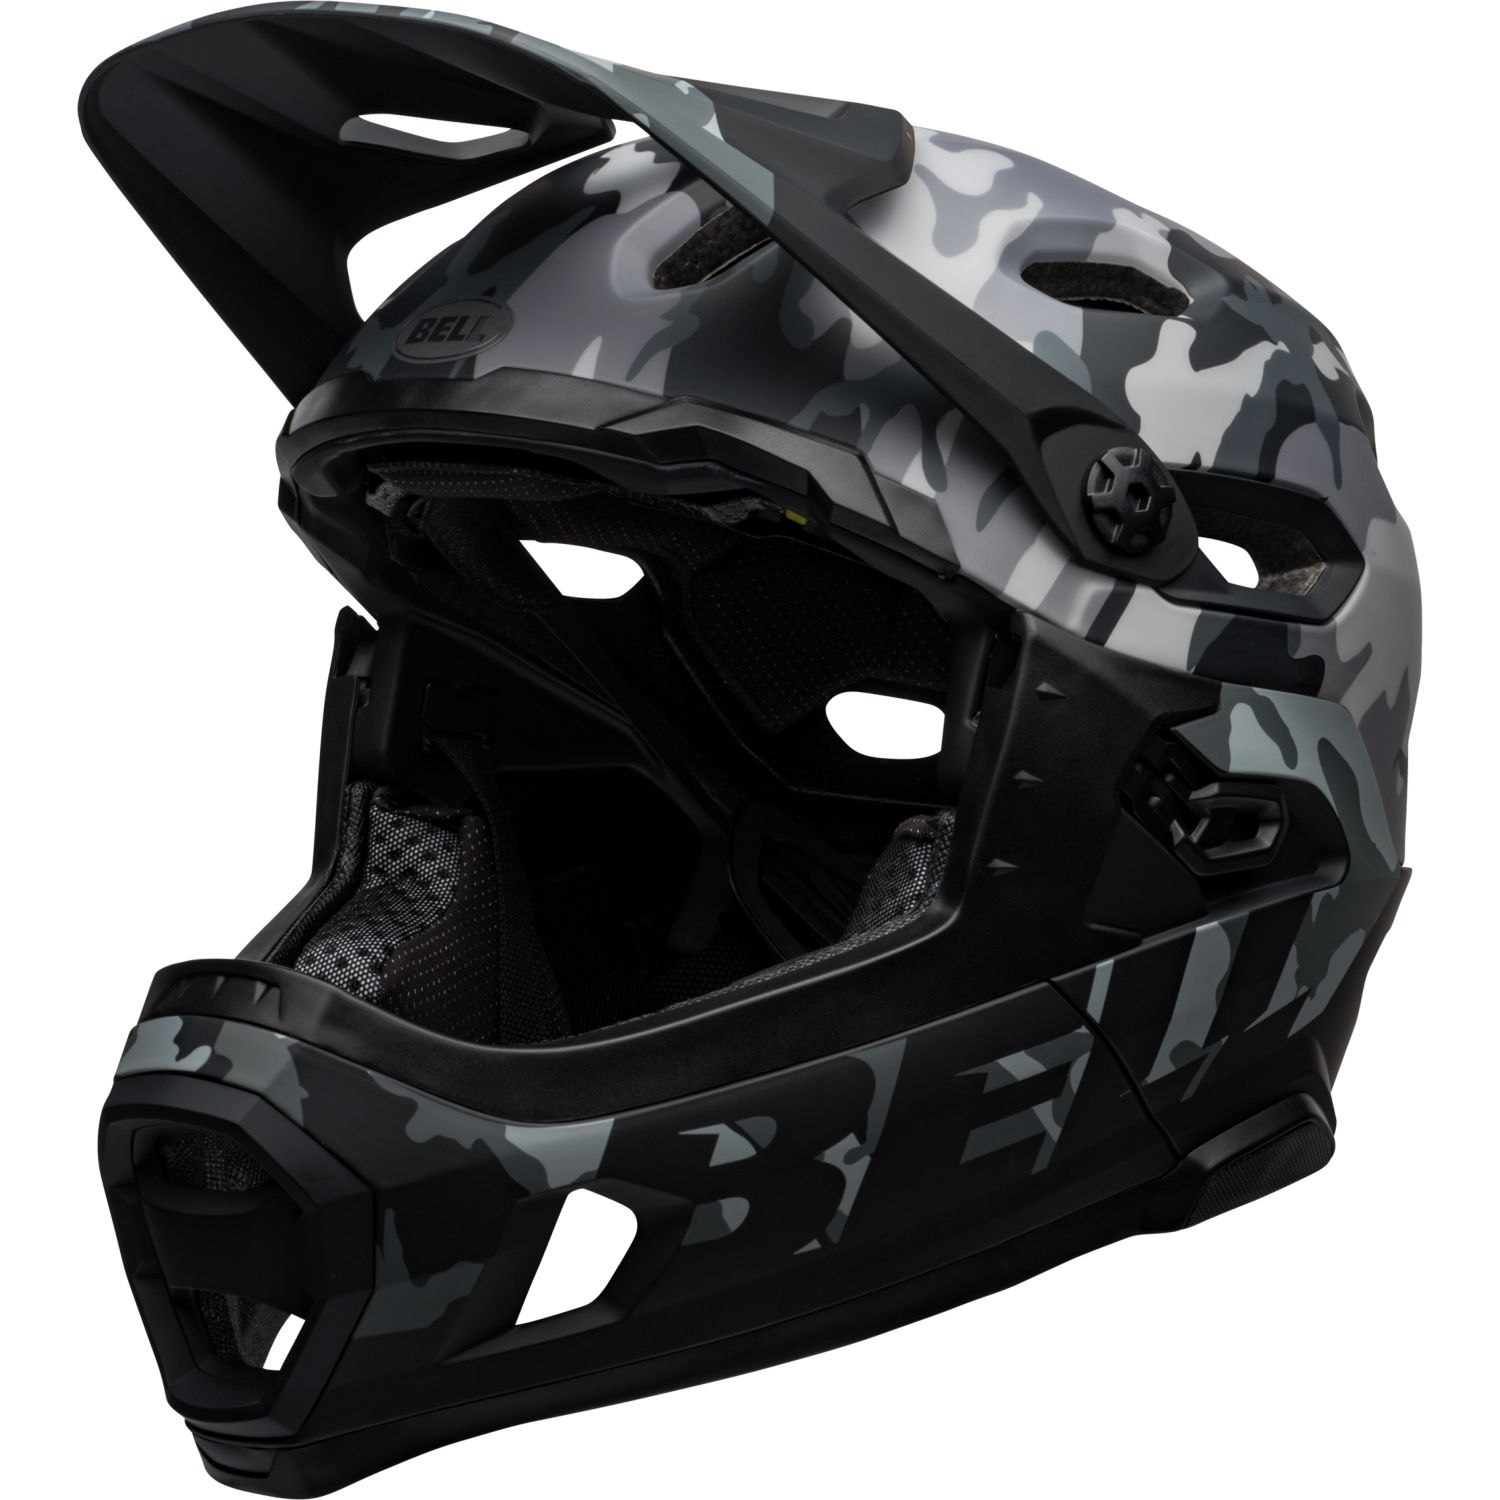 Picture of Bell Super DH Spherical Helmet - matte/gloss black camo